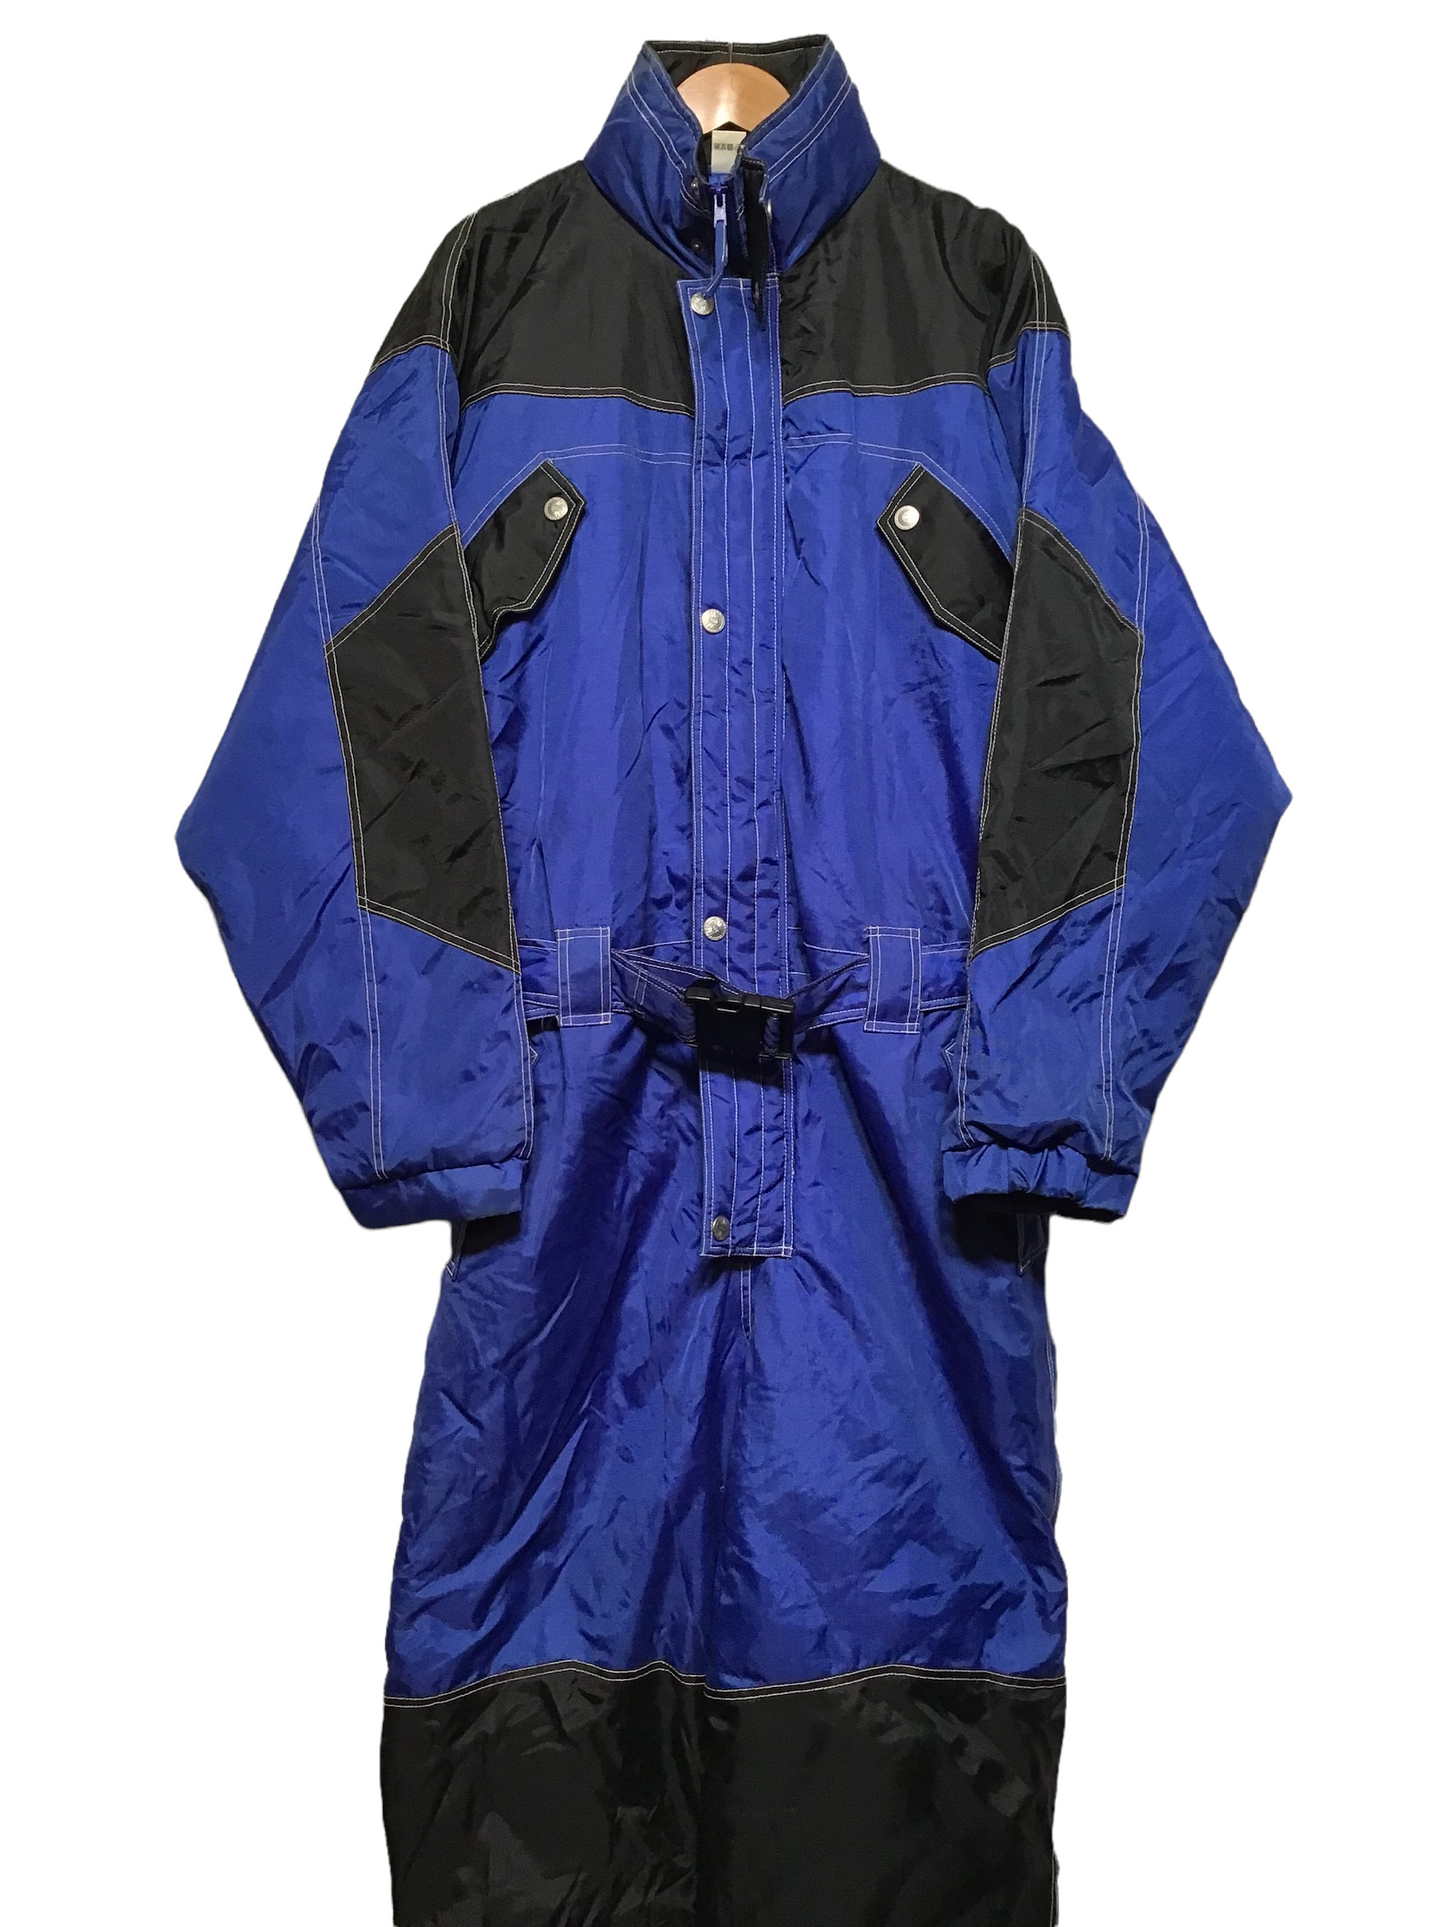 Blue Ski Suit (Size XXL)